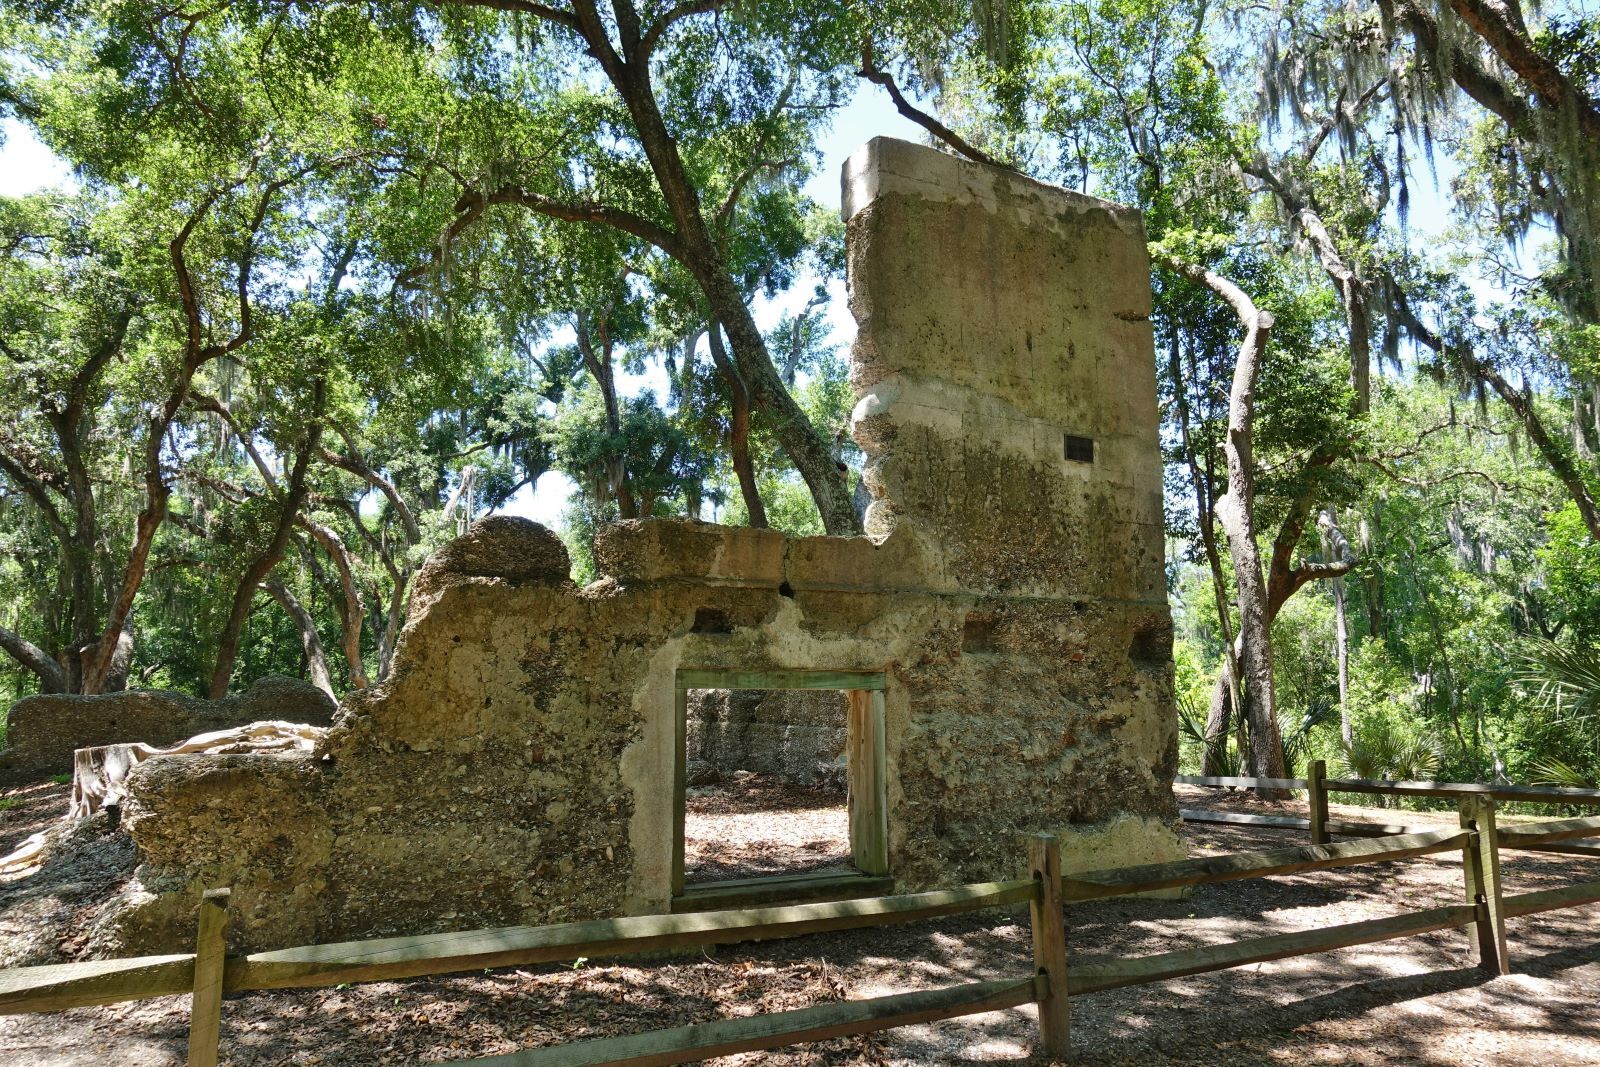 Plantation ruins on Hilton Head Island